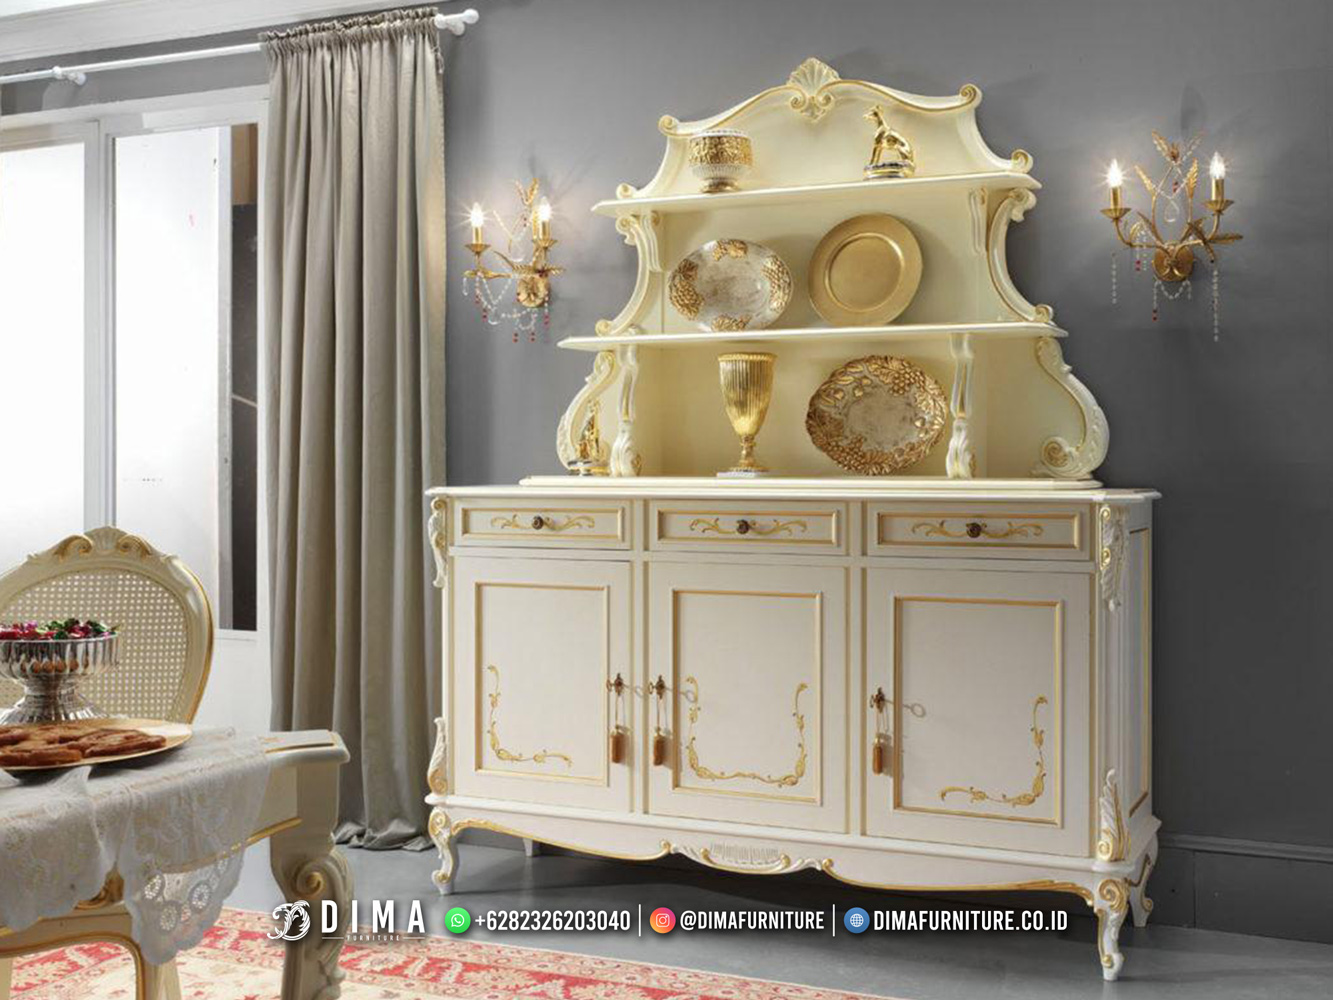 Jual Meja Konsol Mewah Jepara Multifungsi Luxury Ivory Inessa BM440